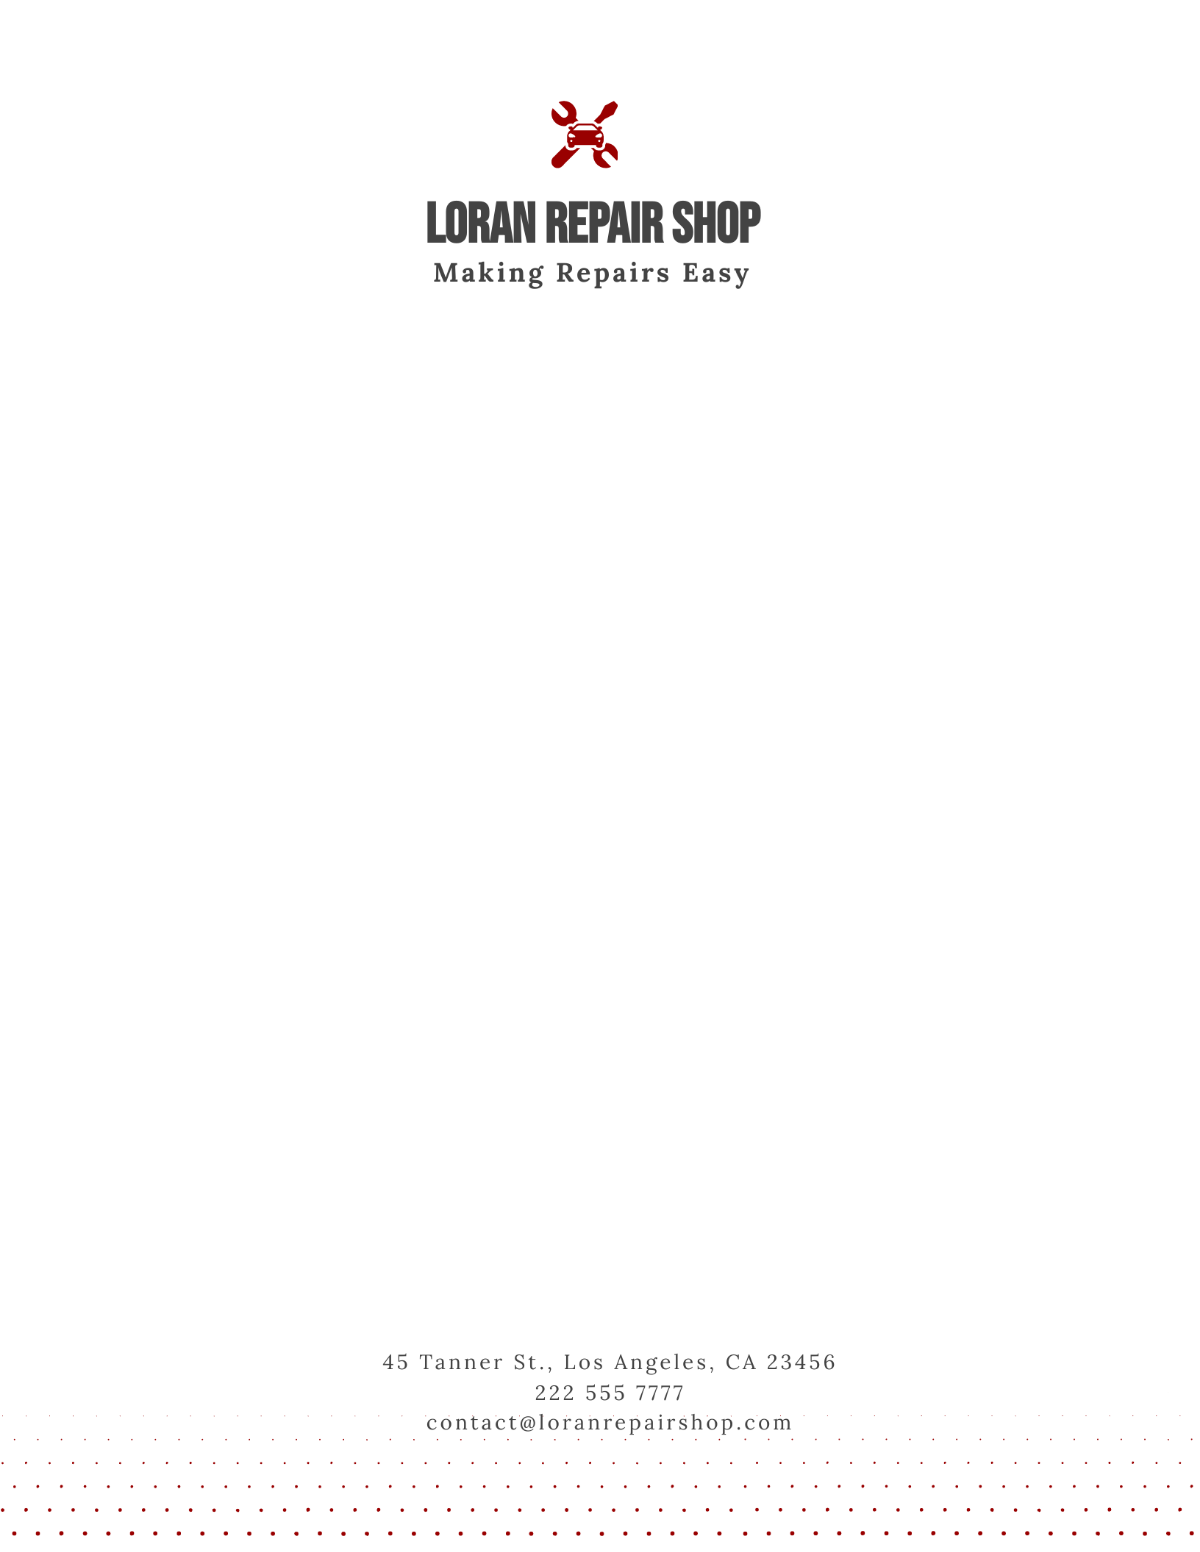 Free Vintage Repair Shop Letterhead Template